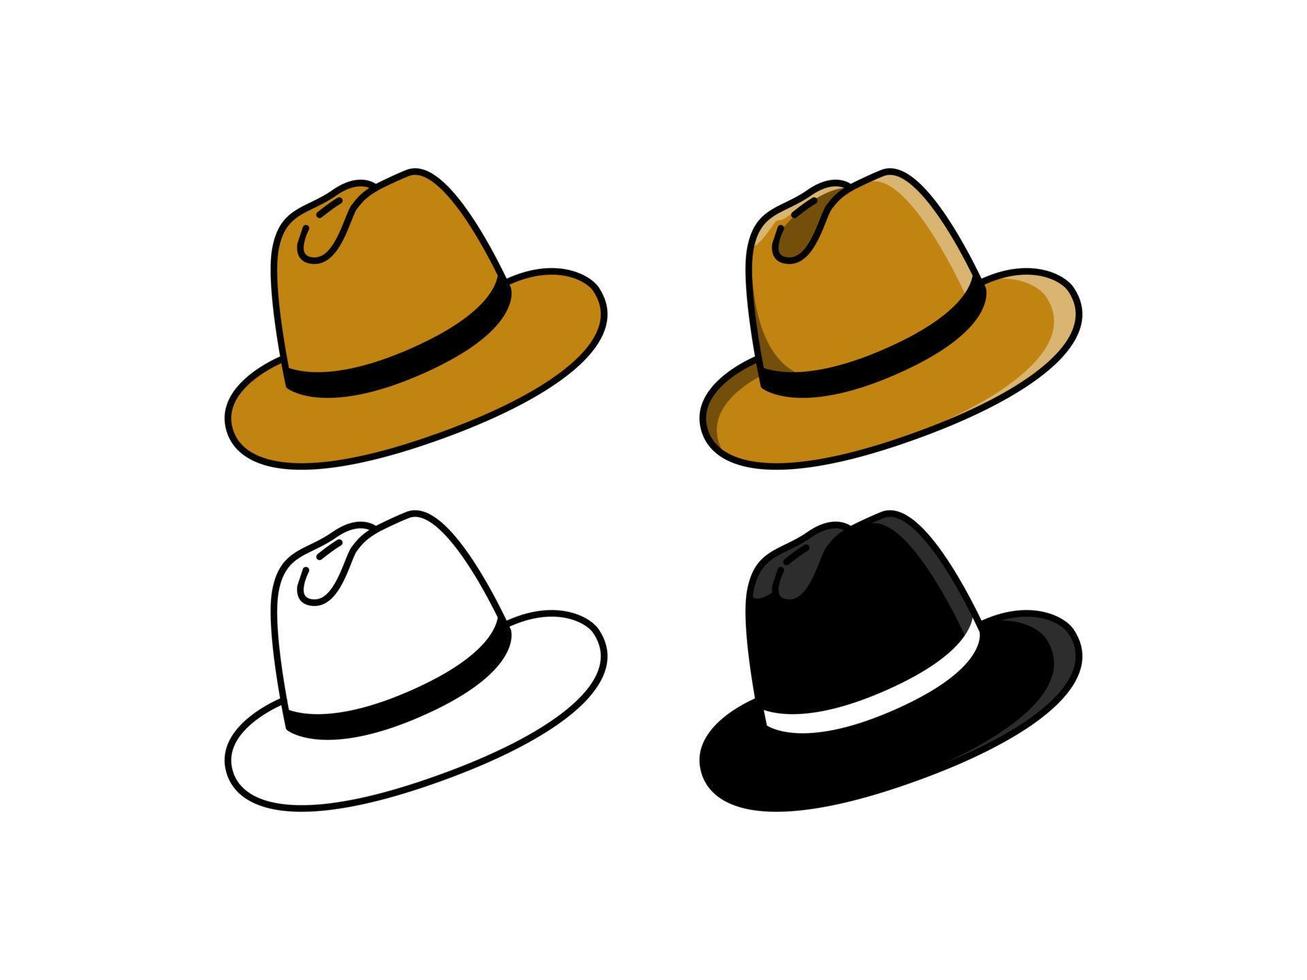 o design gráfico clássico do chapéu panamá é adequado para ser usado como logotipo ou complemento de design vetor